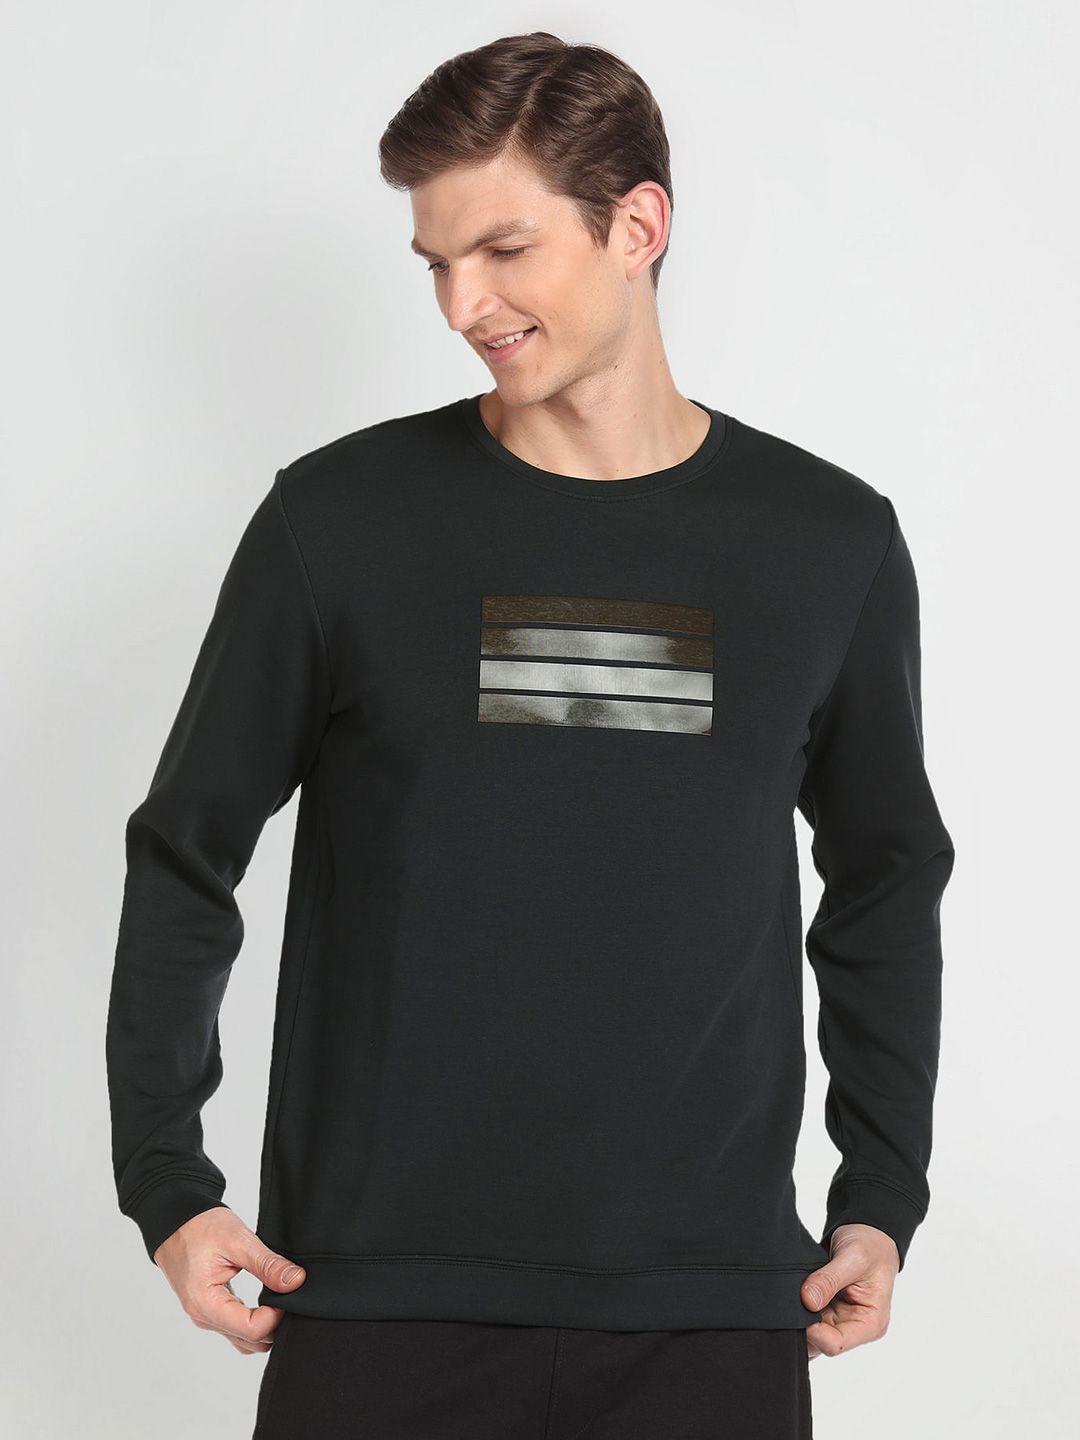 arrow new york printed pullover sweatshirt